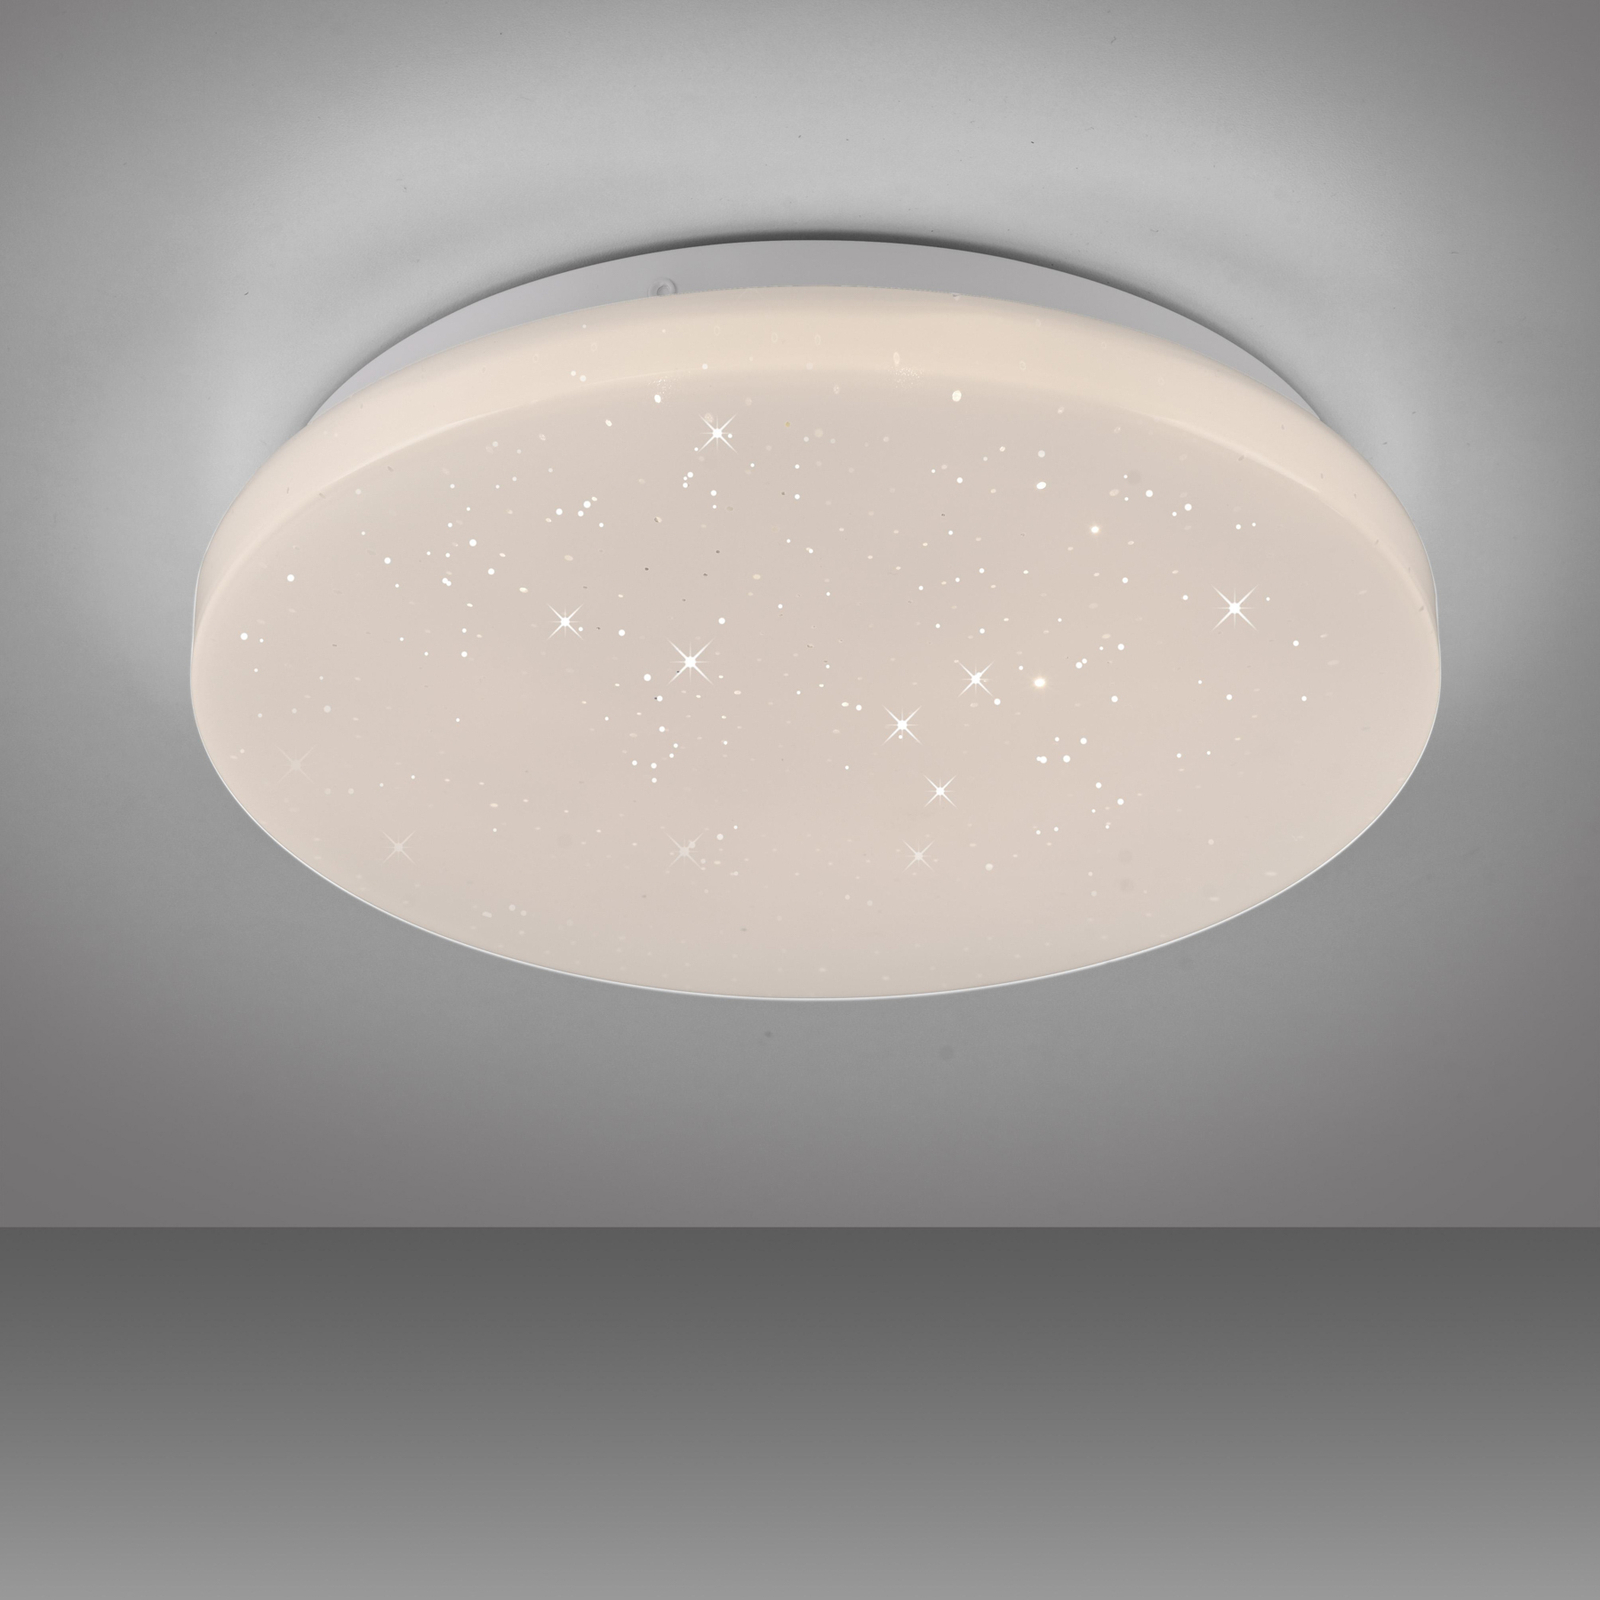 JUST LIGHT. LED lubinis šviestuvas "Uranus", plastikinis, 3 000 K